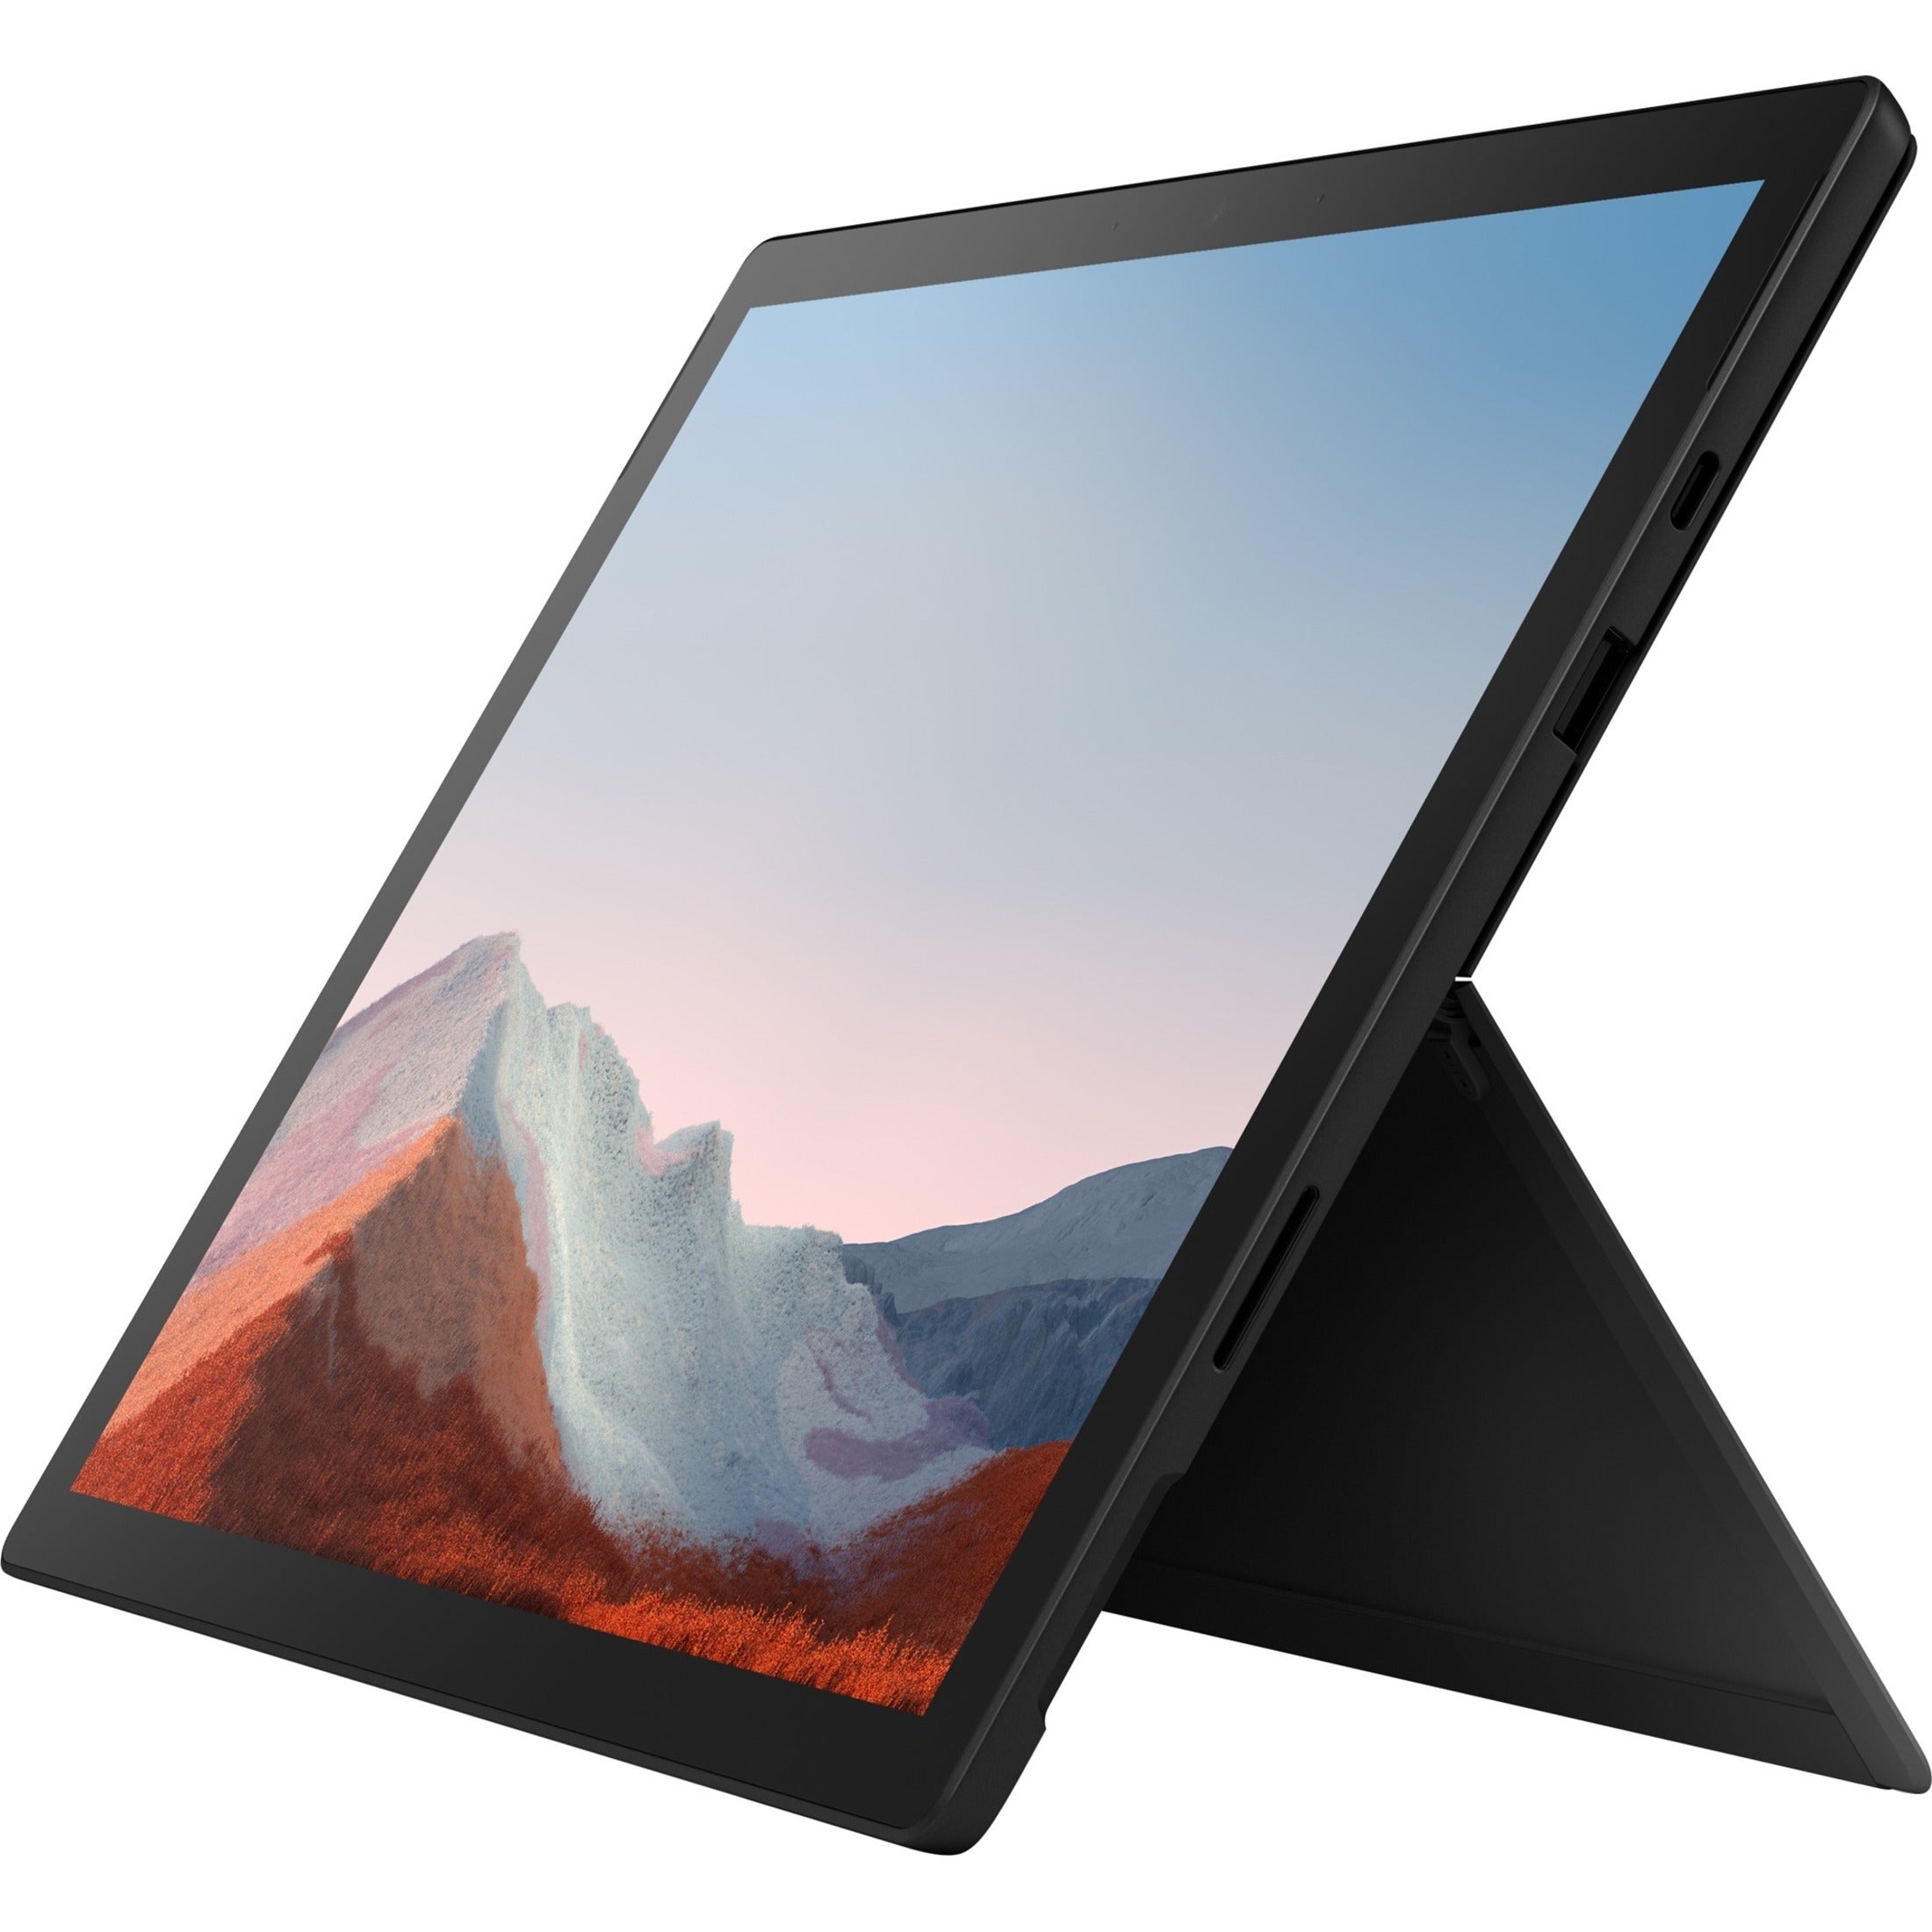 Microsoft 1NA-00016 Surface Pro 7+ Tablet, 11th Gen Core i5, 8GB RAM, 256GB SSD, Windows 10 Pro